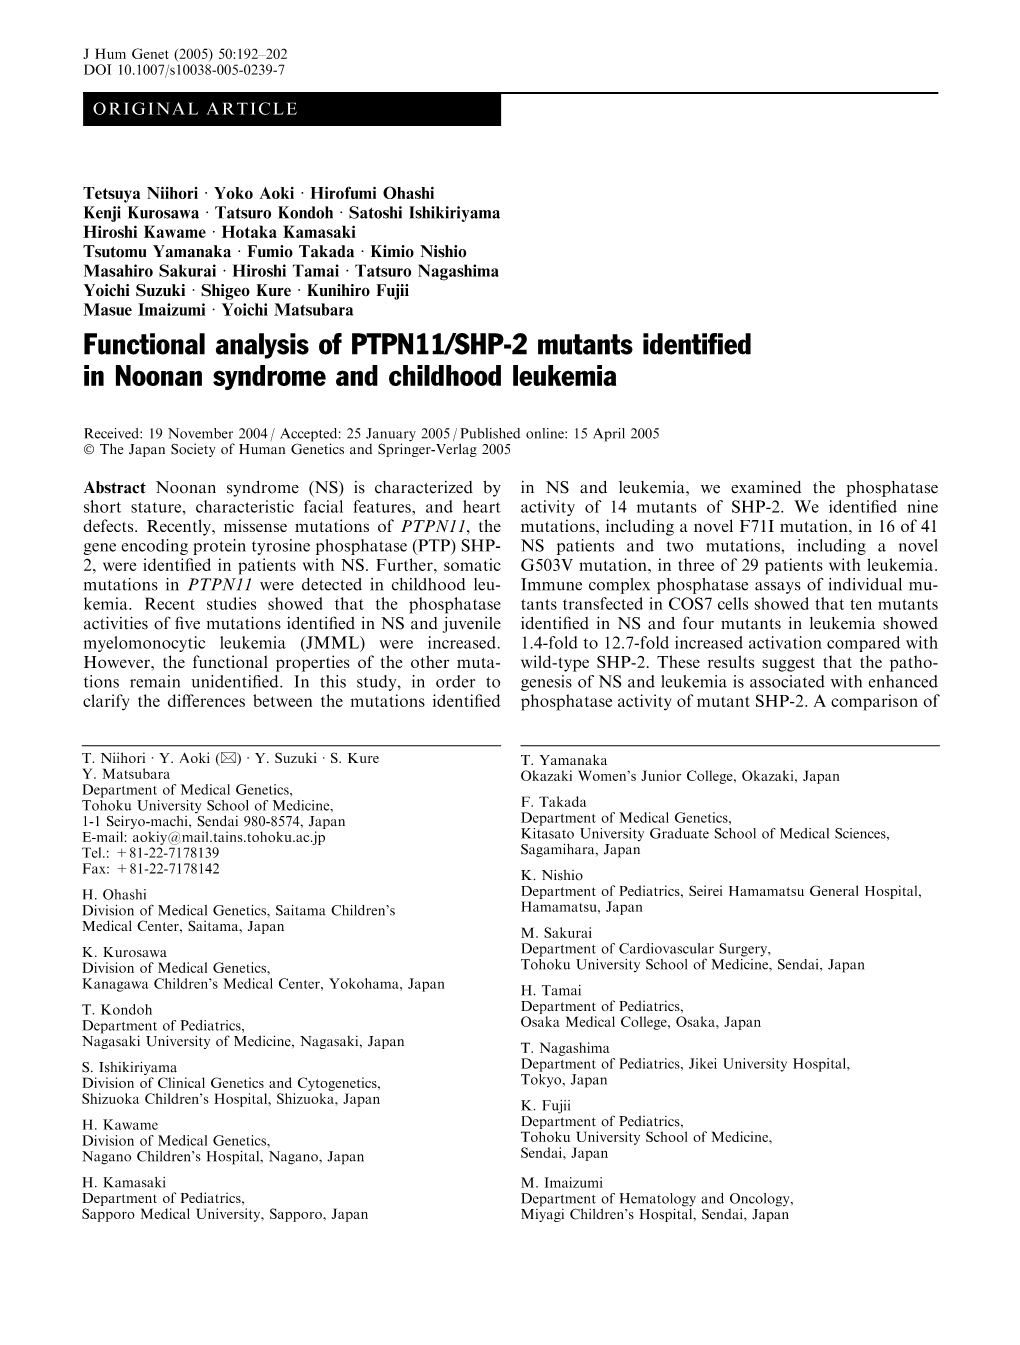 Functional Analysis of PTPN11/SHP-2 Mutants Identified in Noonan